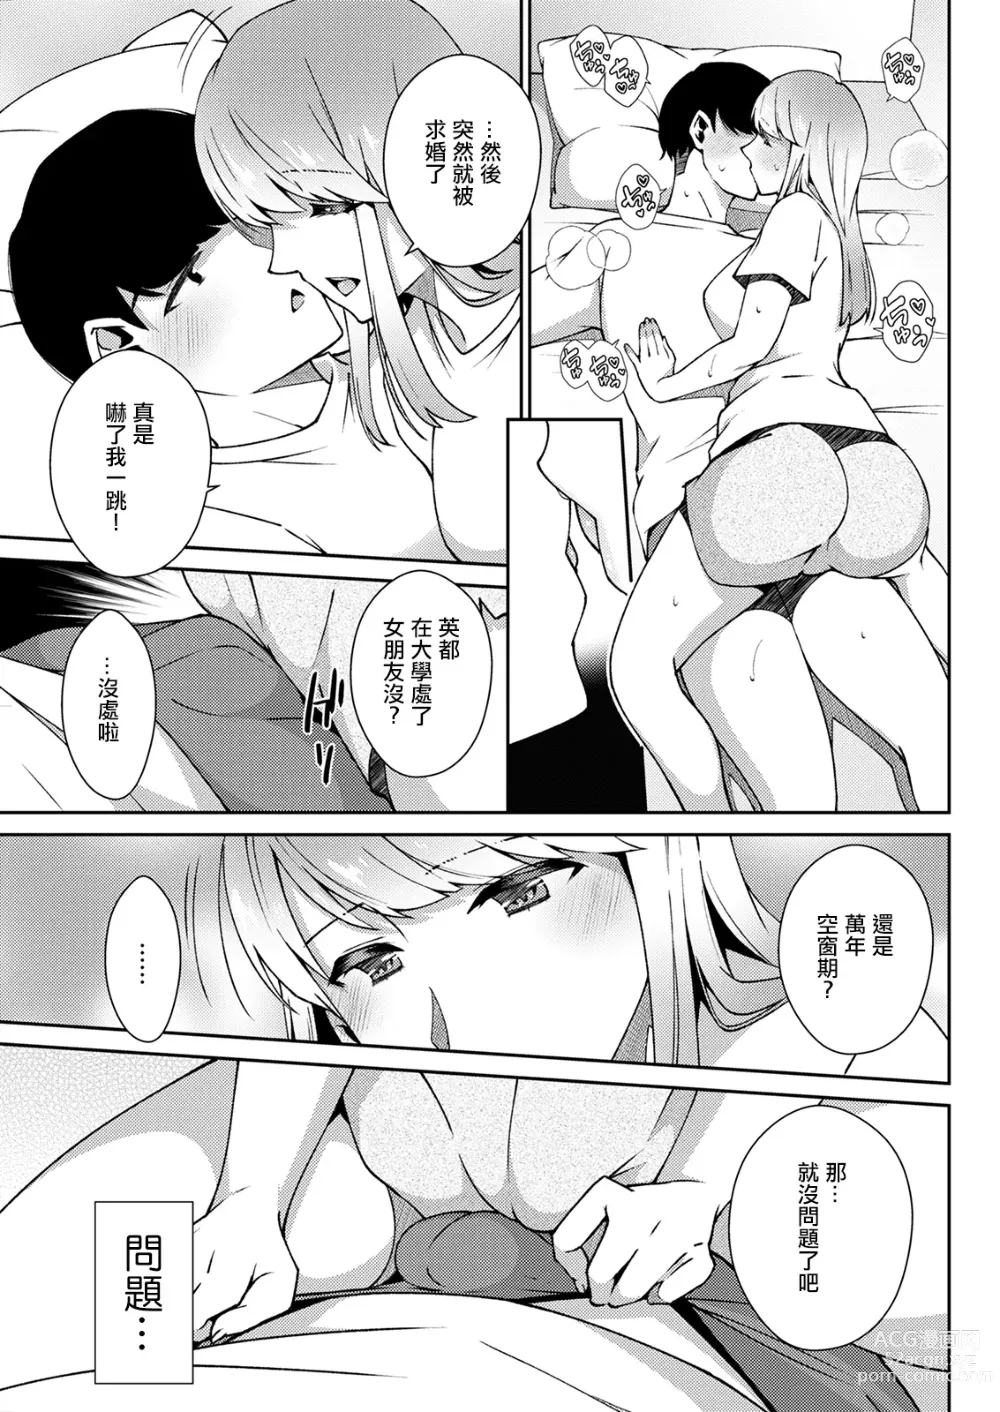 Page 7 of manga Koi no Wazurai